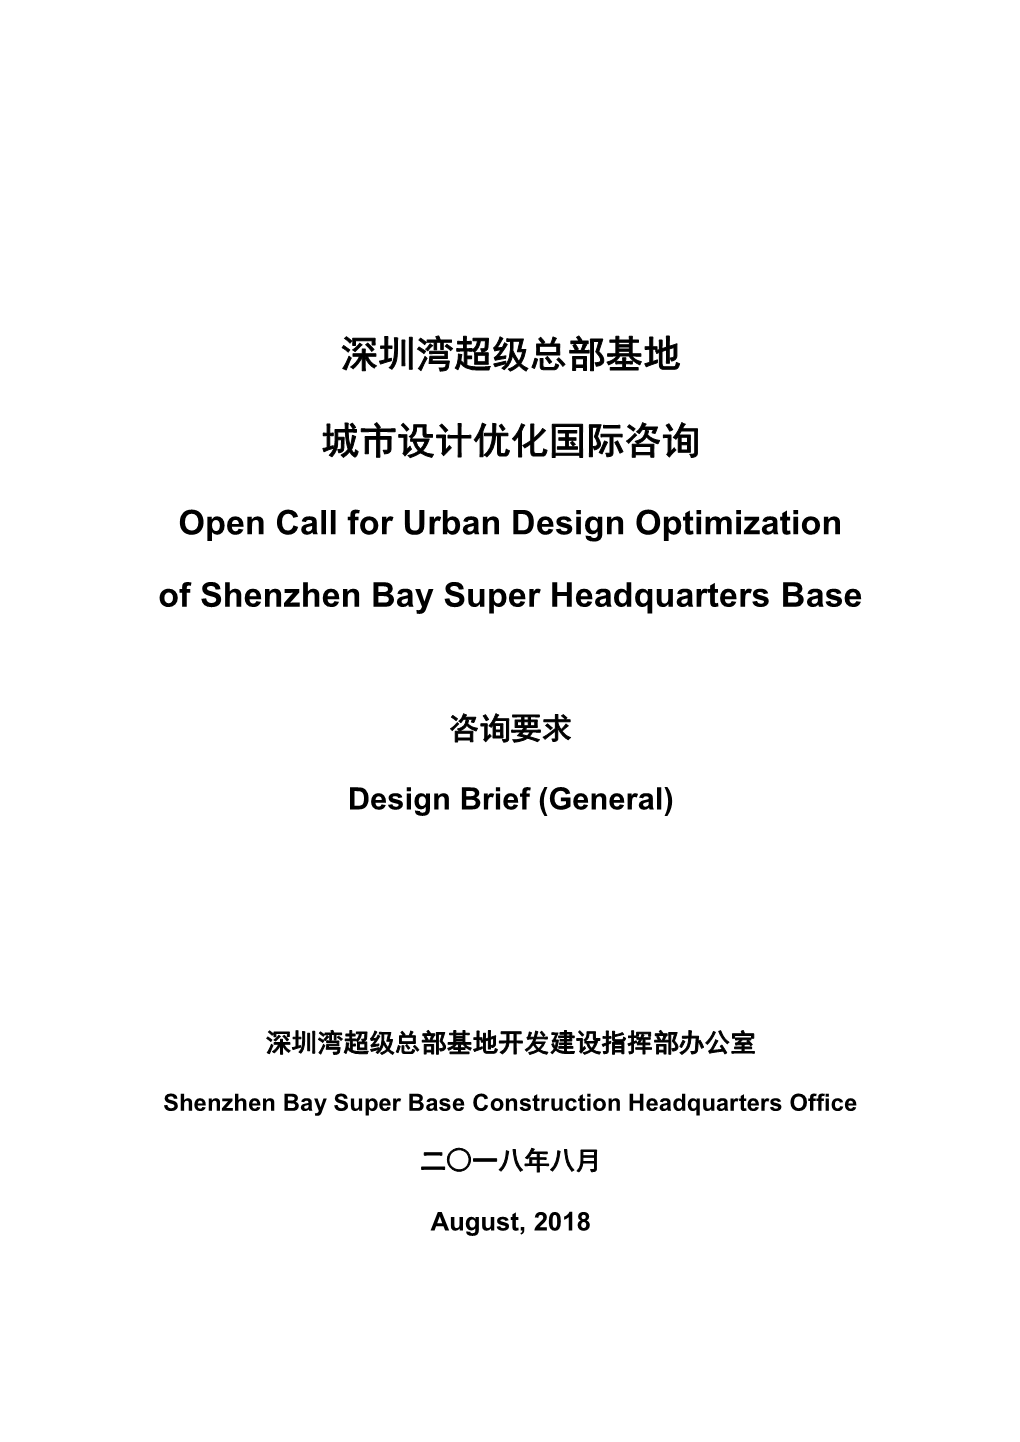 深圳湾超级总部基地城市设计优化国际咨询-咨询要求 Open Call for Urban Design Optimization of Shenzhen Bay Super Headquarters Base –Design Brief (General)